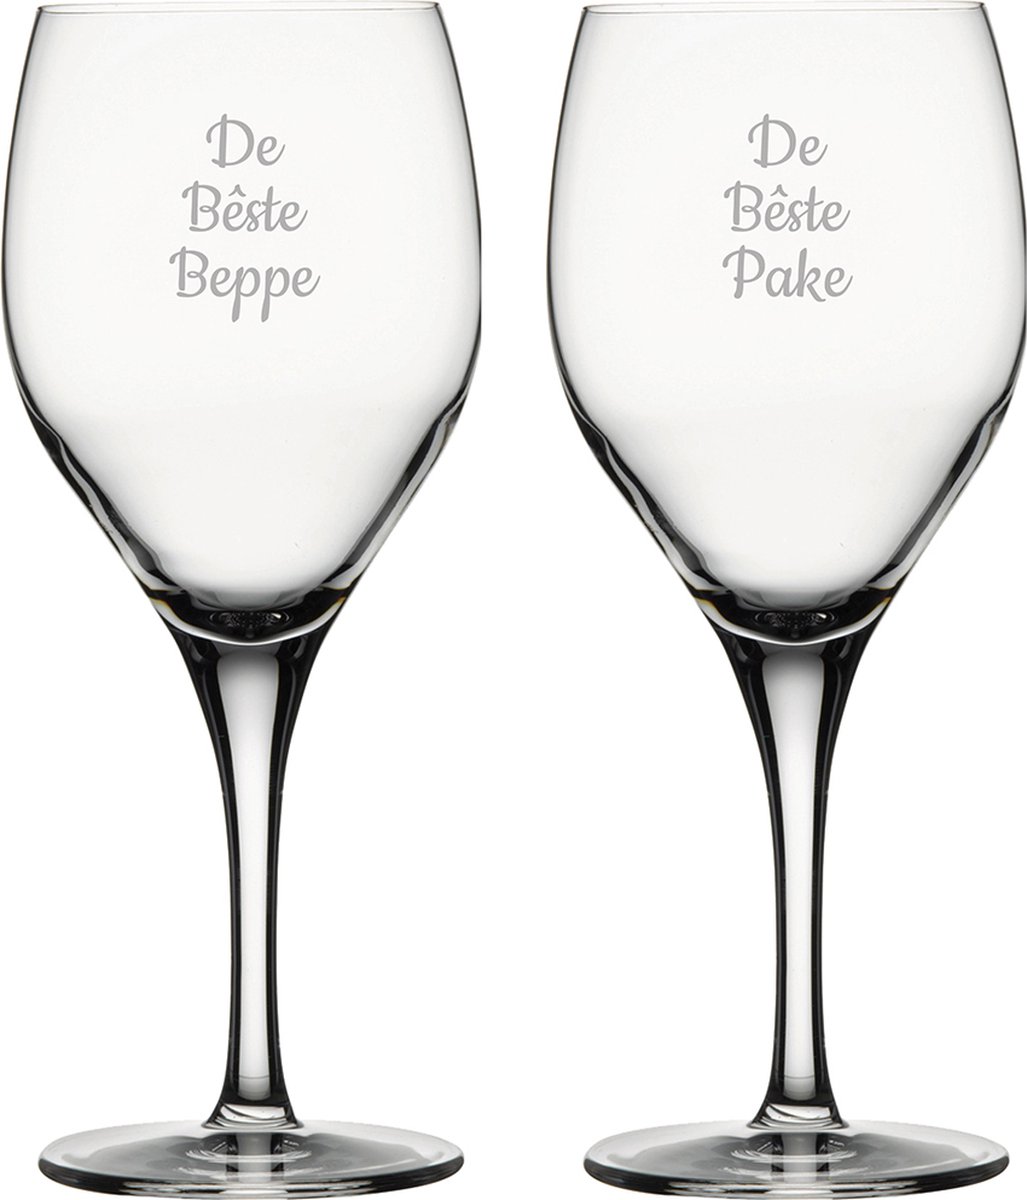 Gegraveerde witte wijnglas 34cl De Bêste Pake-De Bêste Beppe